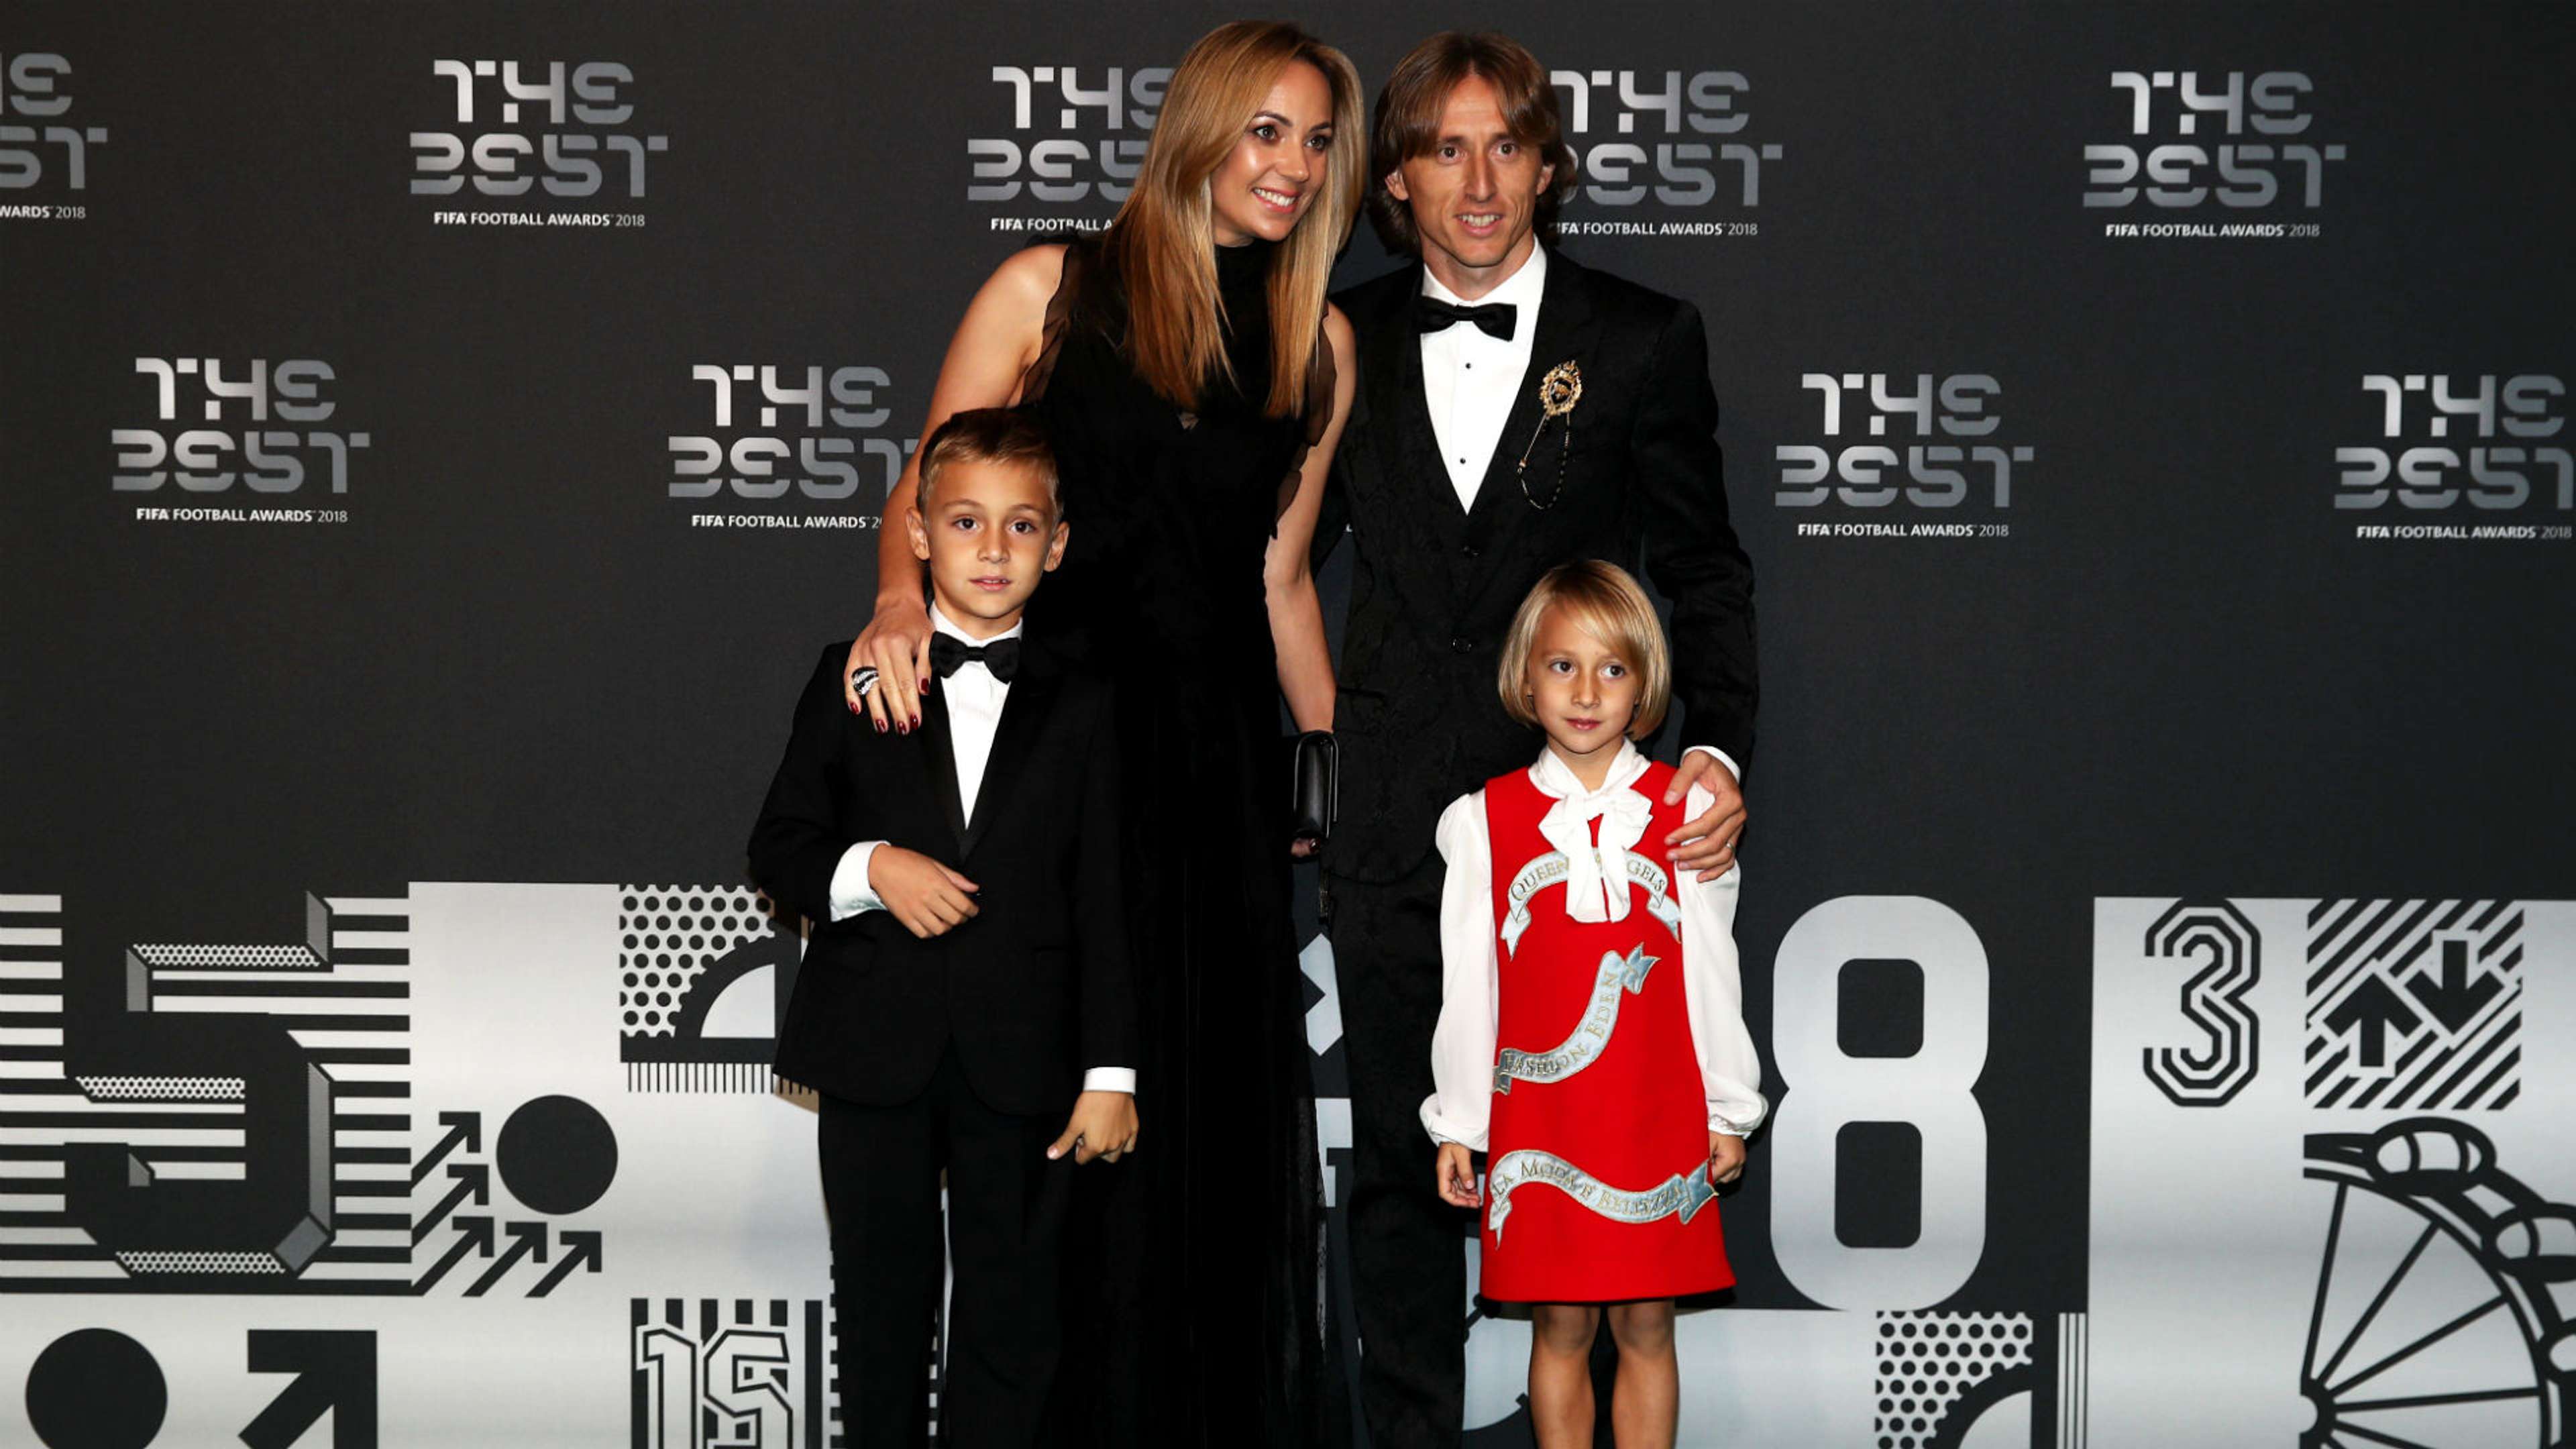 fifa awards the best - luka modric family - 24092018